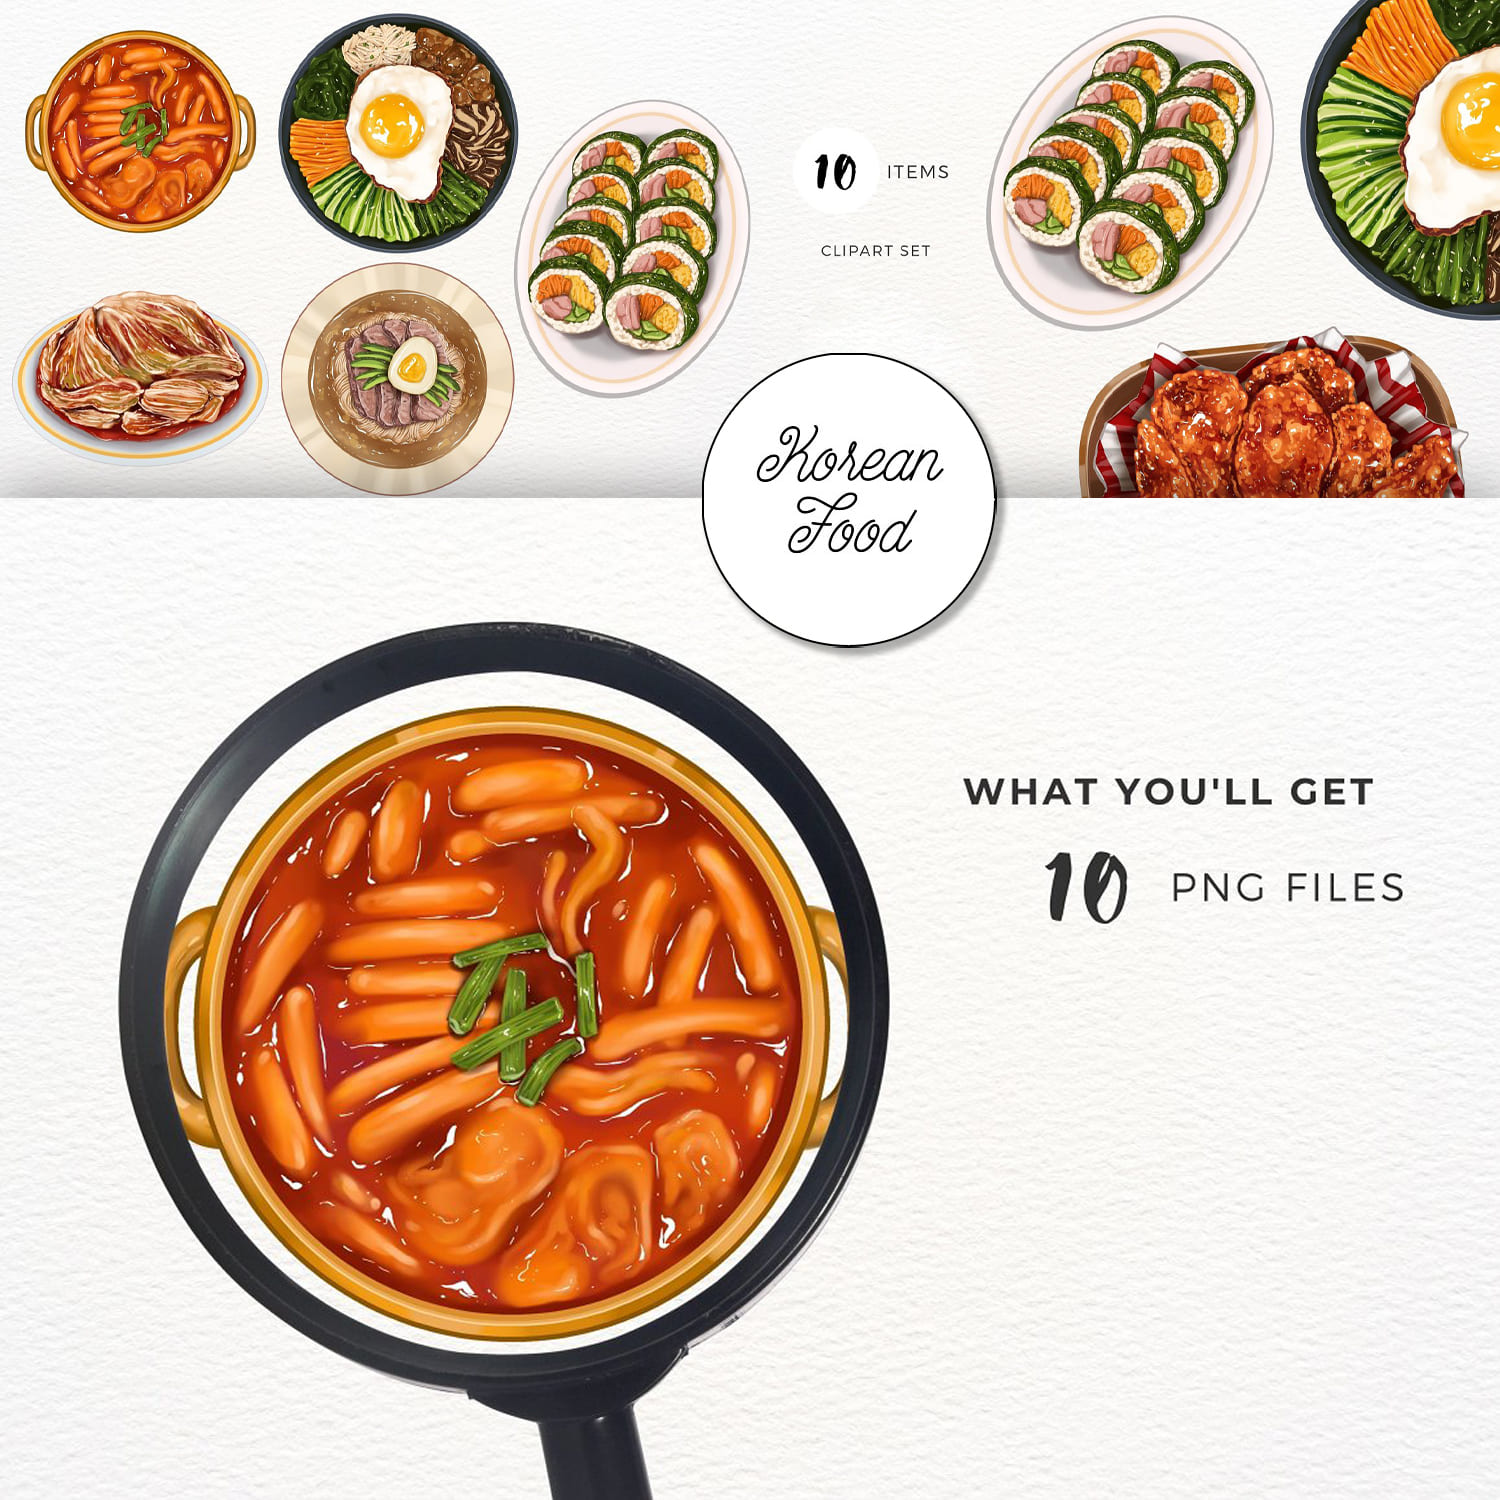 Korean Food Illustration cover.